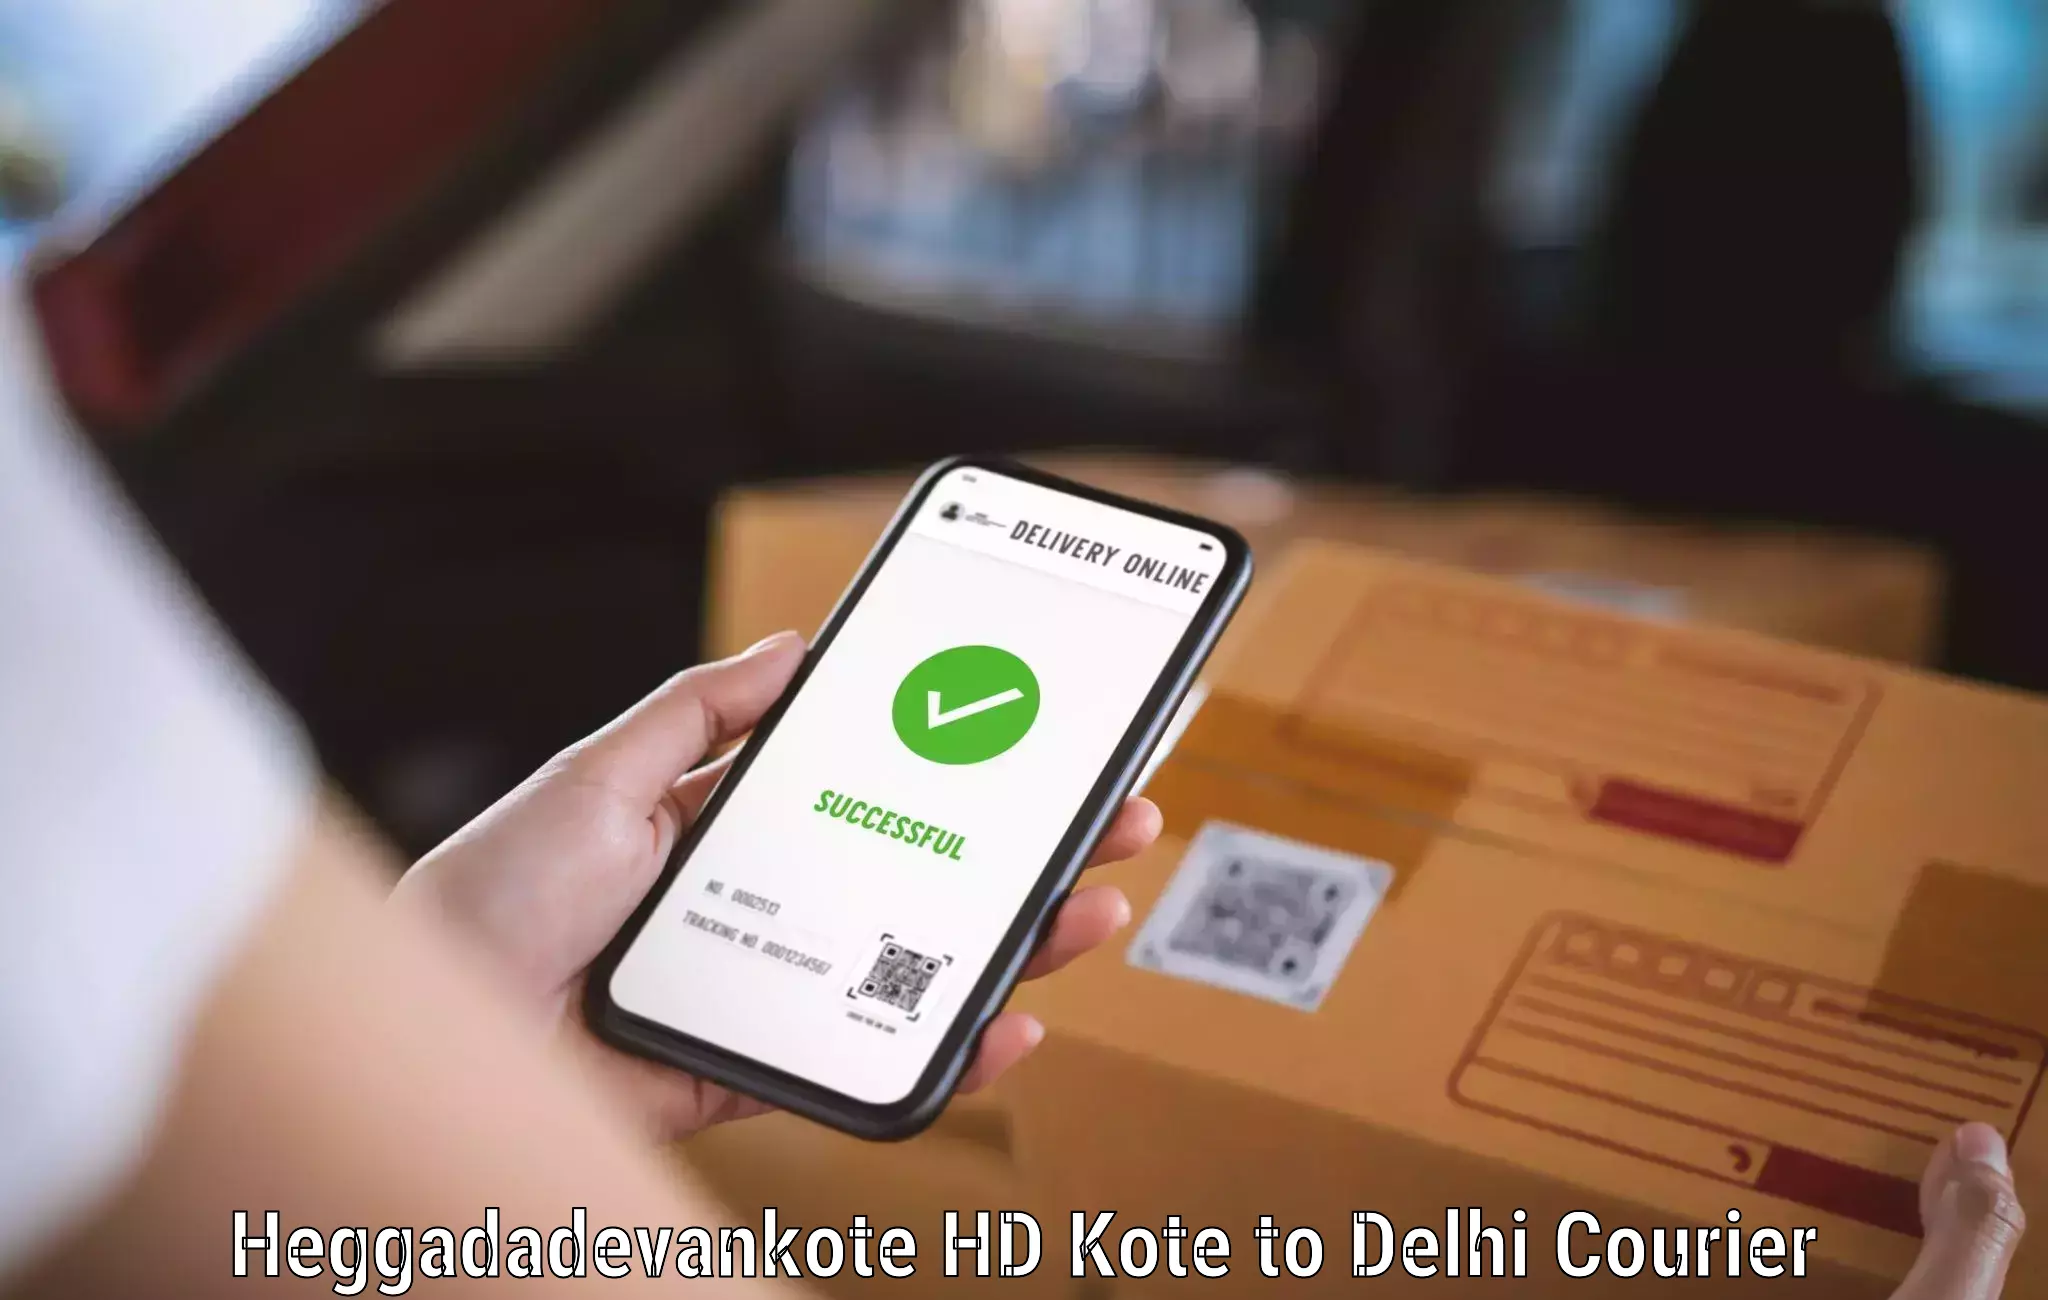 Efficient parcel service Heggadadevankote HD Kote to NCR